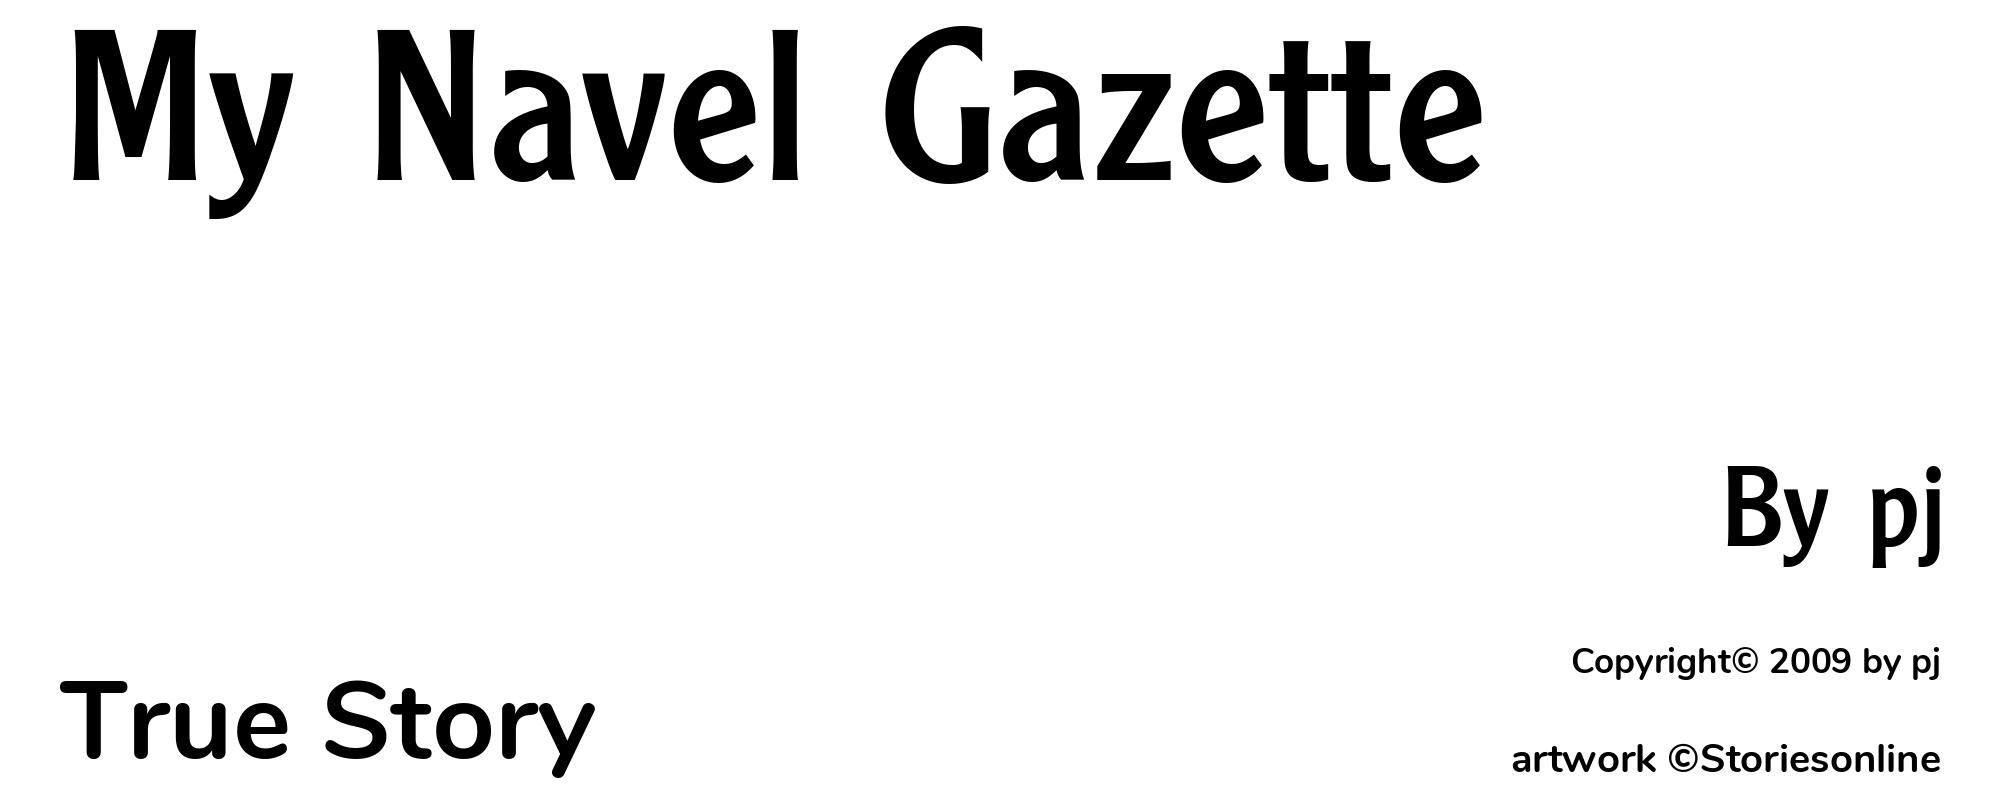 My Navel Gazette - Cover